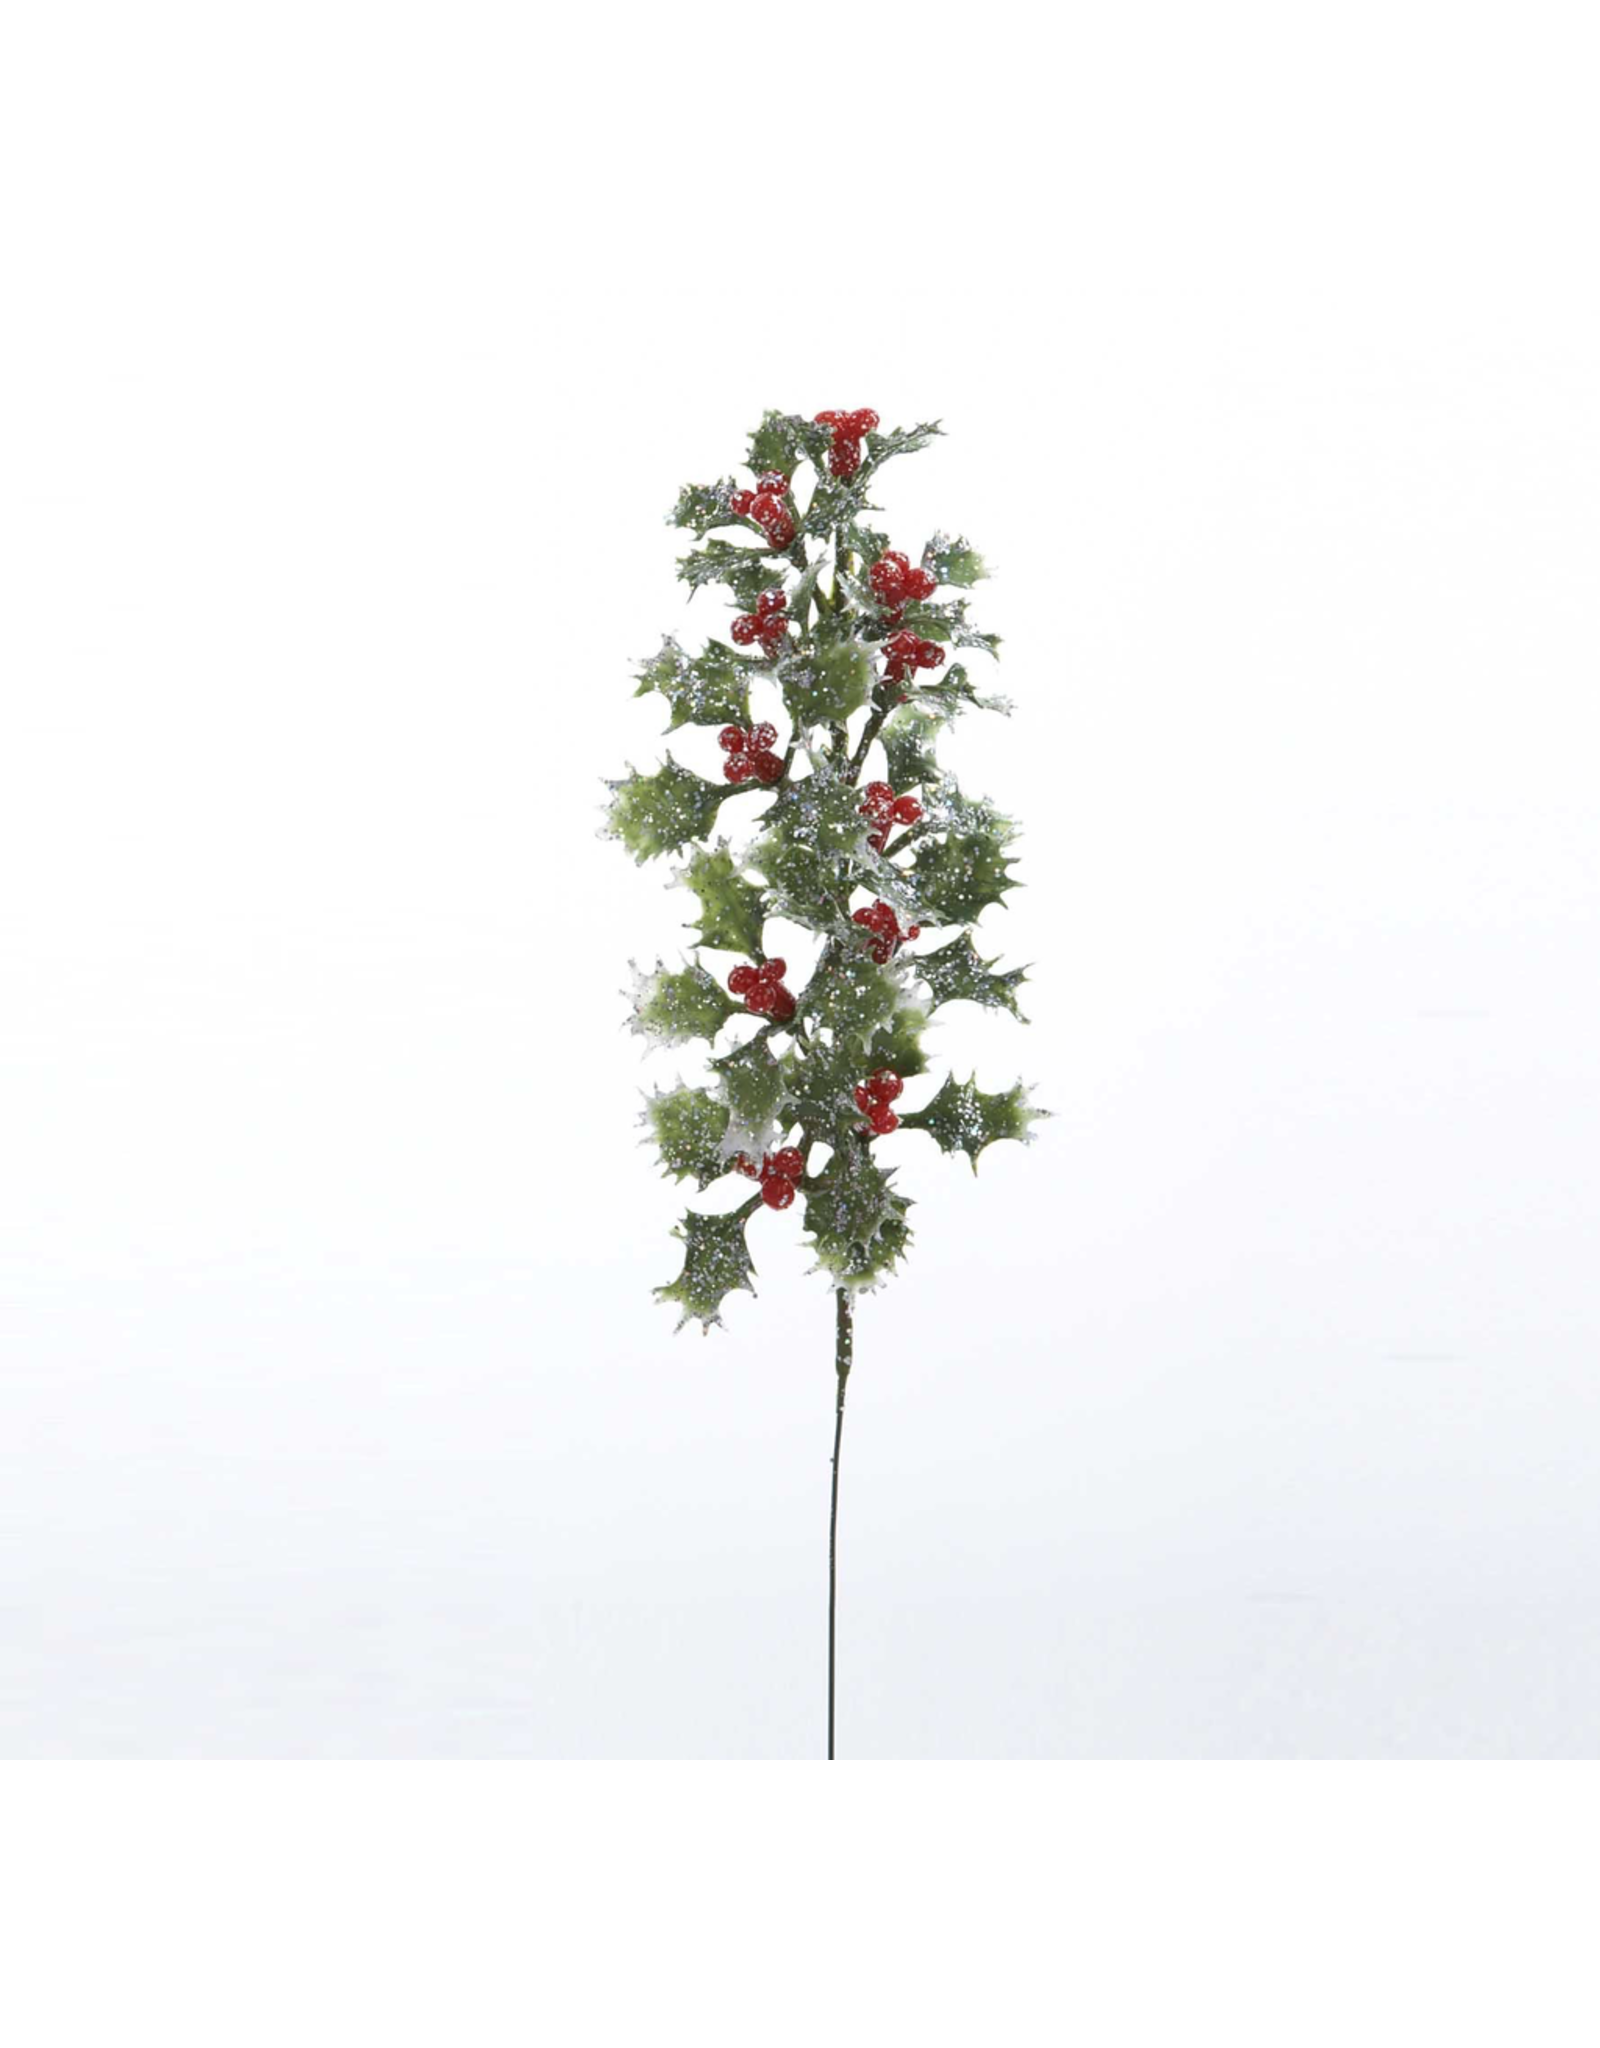 Kurt Adler Mini Holly Spray Pick 3 inch Christmas Flowers Floral Decor